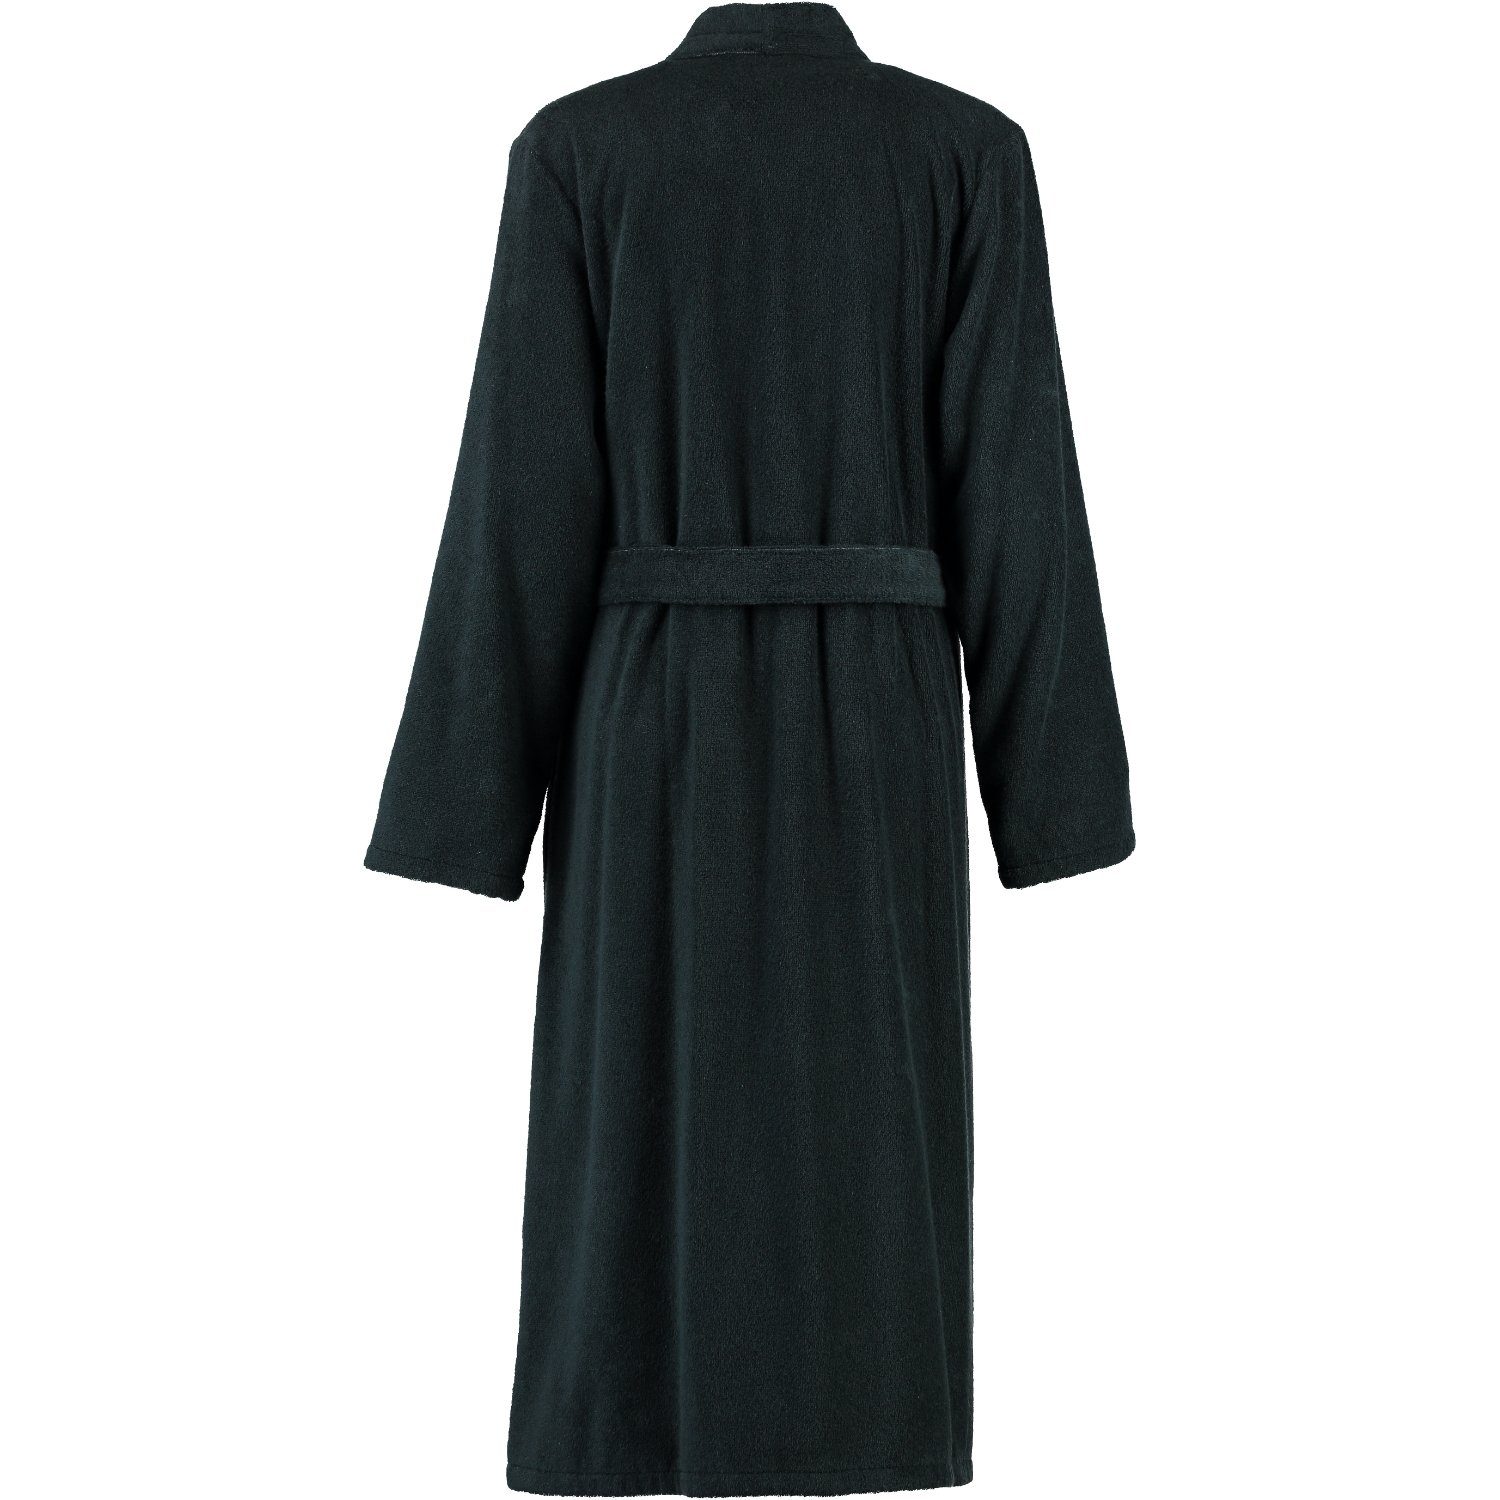 (97) Damenbademantel Schwarz Baumwolle Kimono Frottier, 100% Kimono, Joop! 1616 Classic